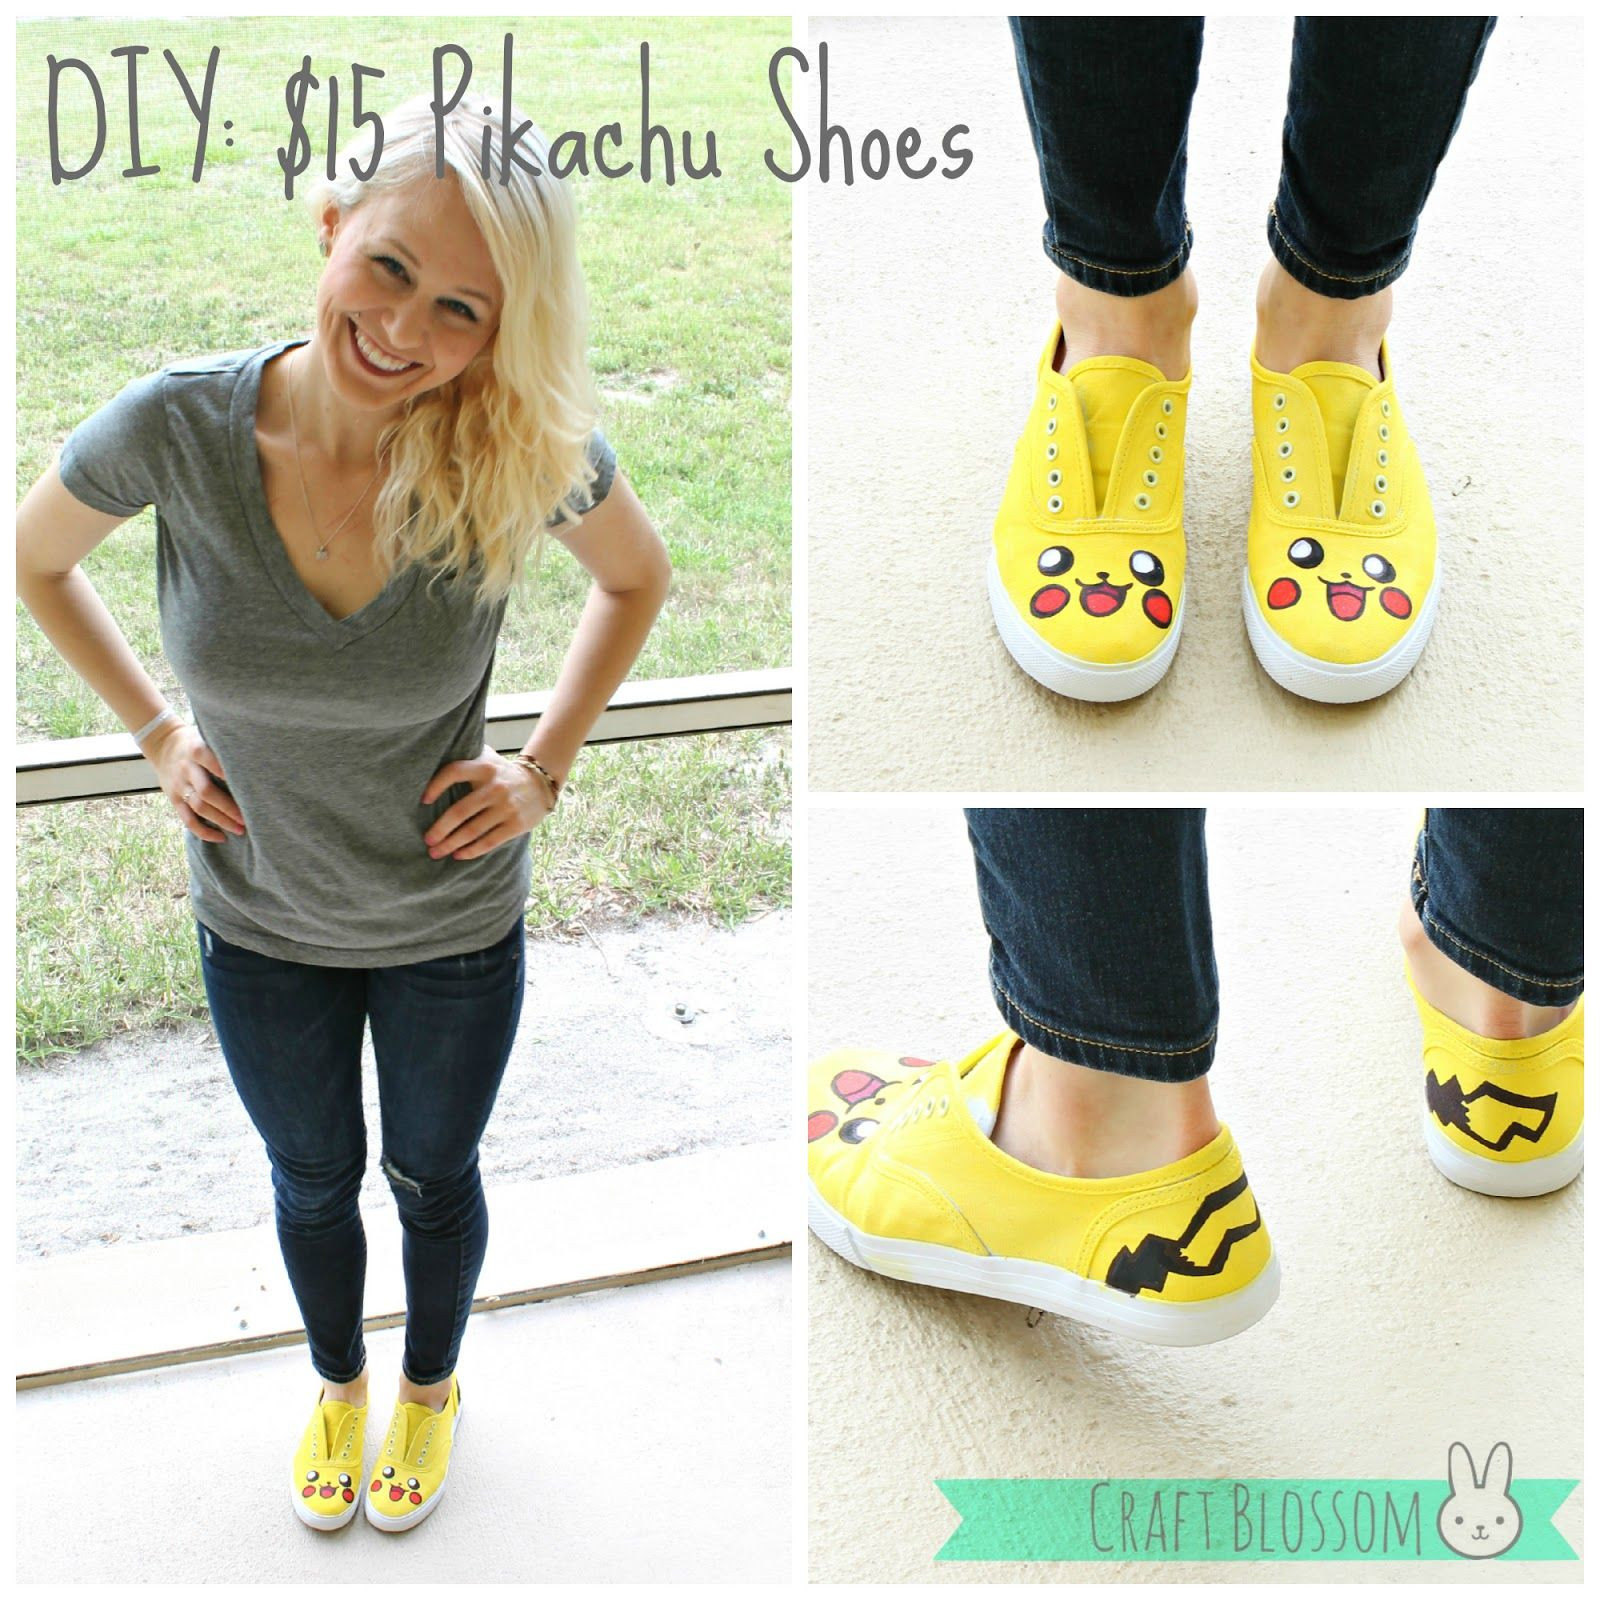 DIY Pikachu Costume
 Bunny Blossom DIY $15 Painted Pikachu Shoes